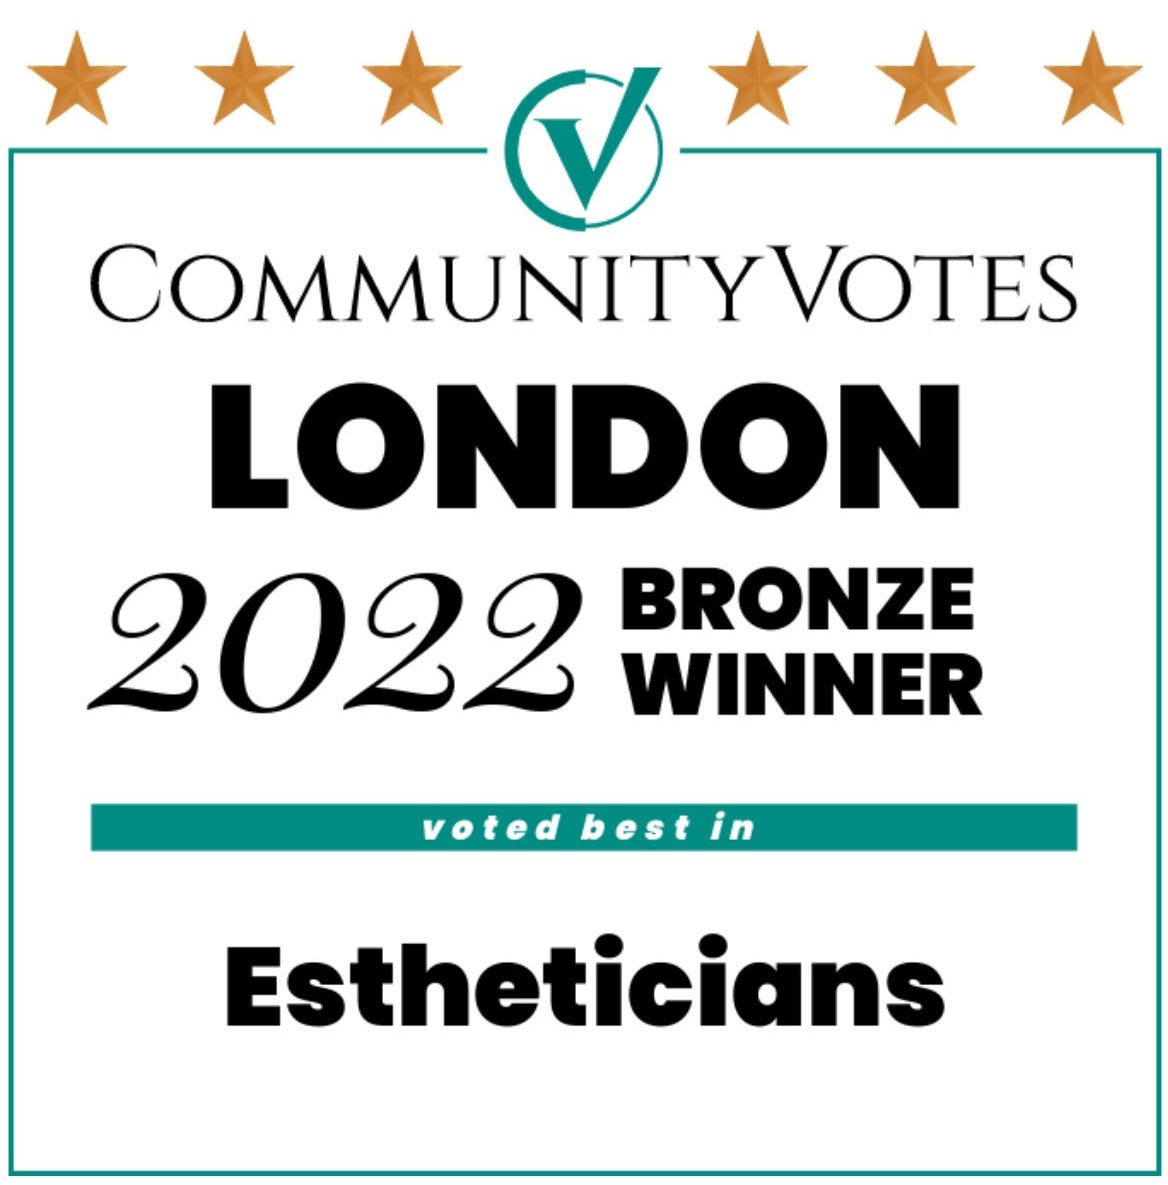 Estheticians Bronze Winner 2022, Community Votes